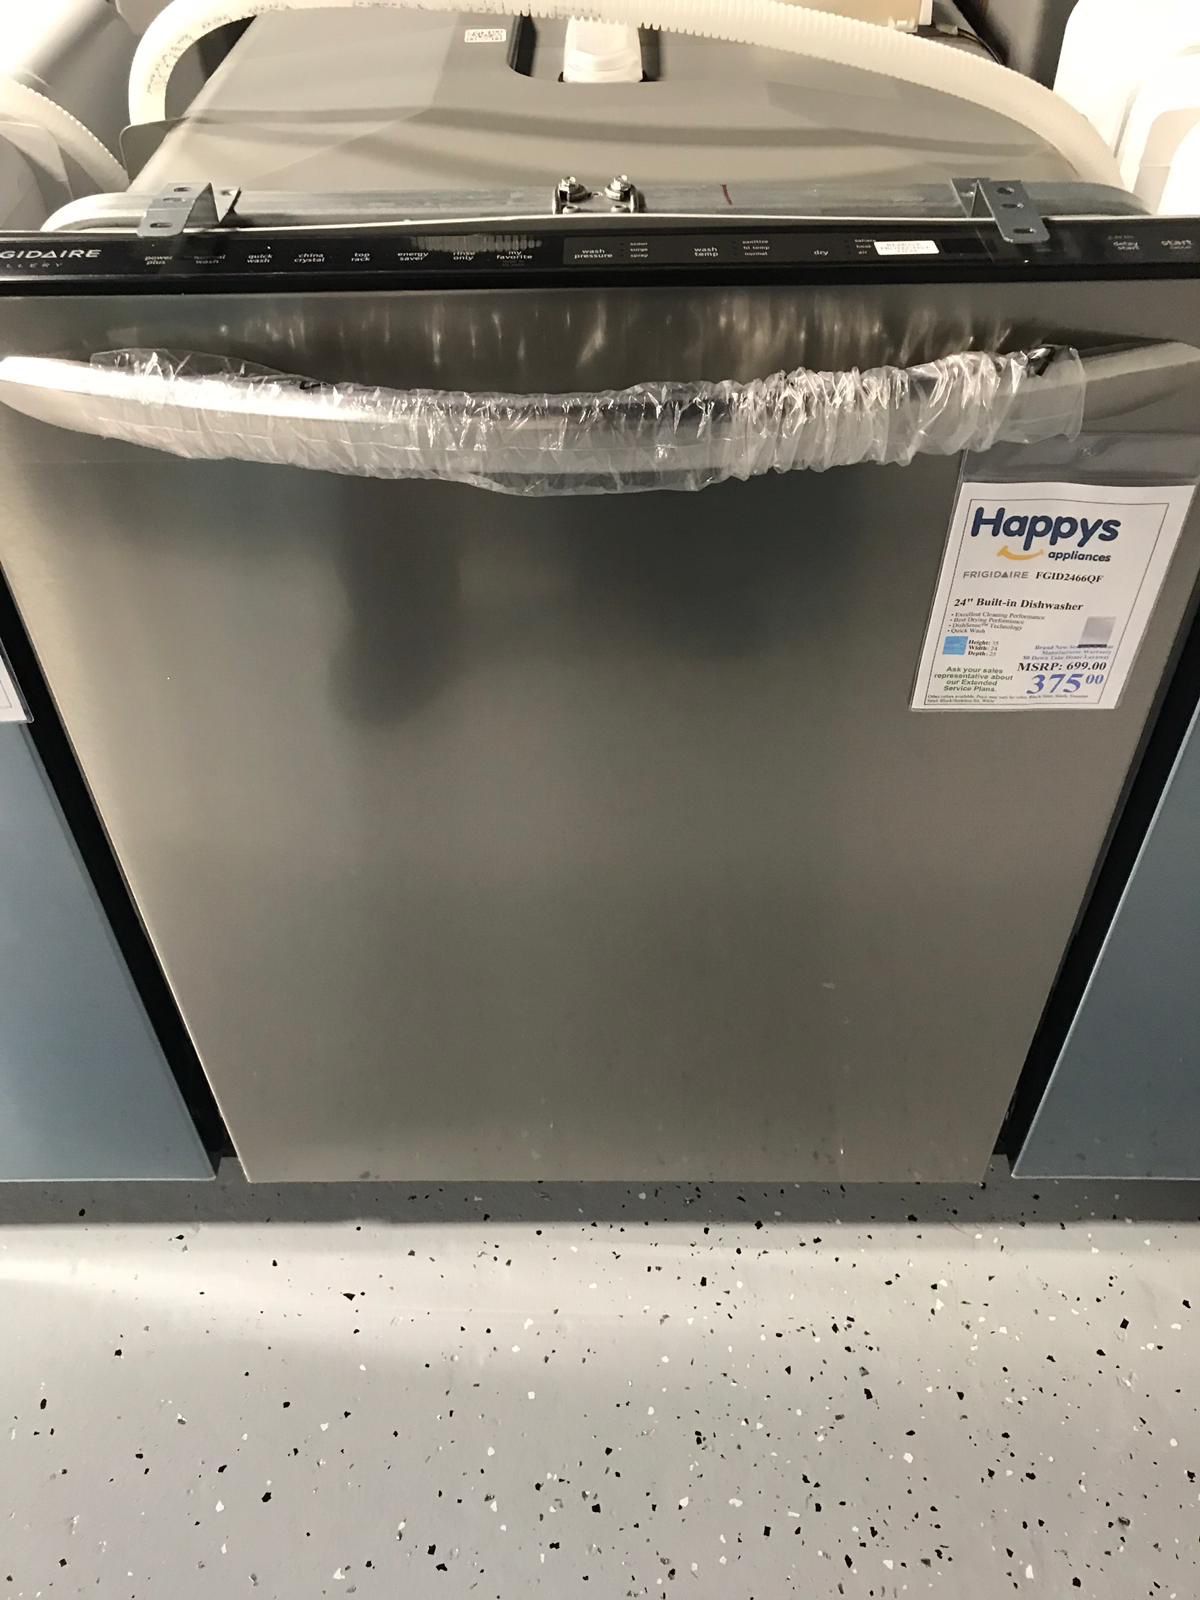 Frigidare dishwasher